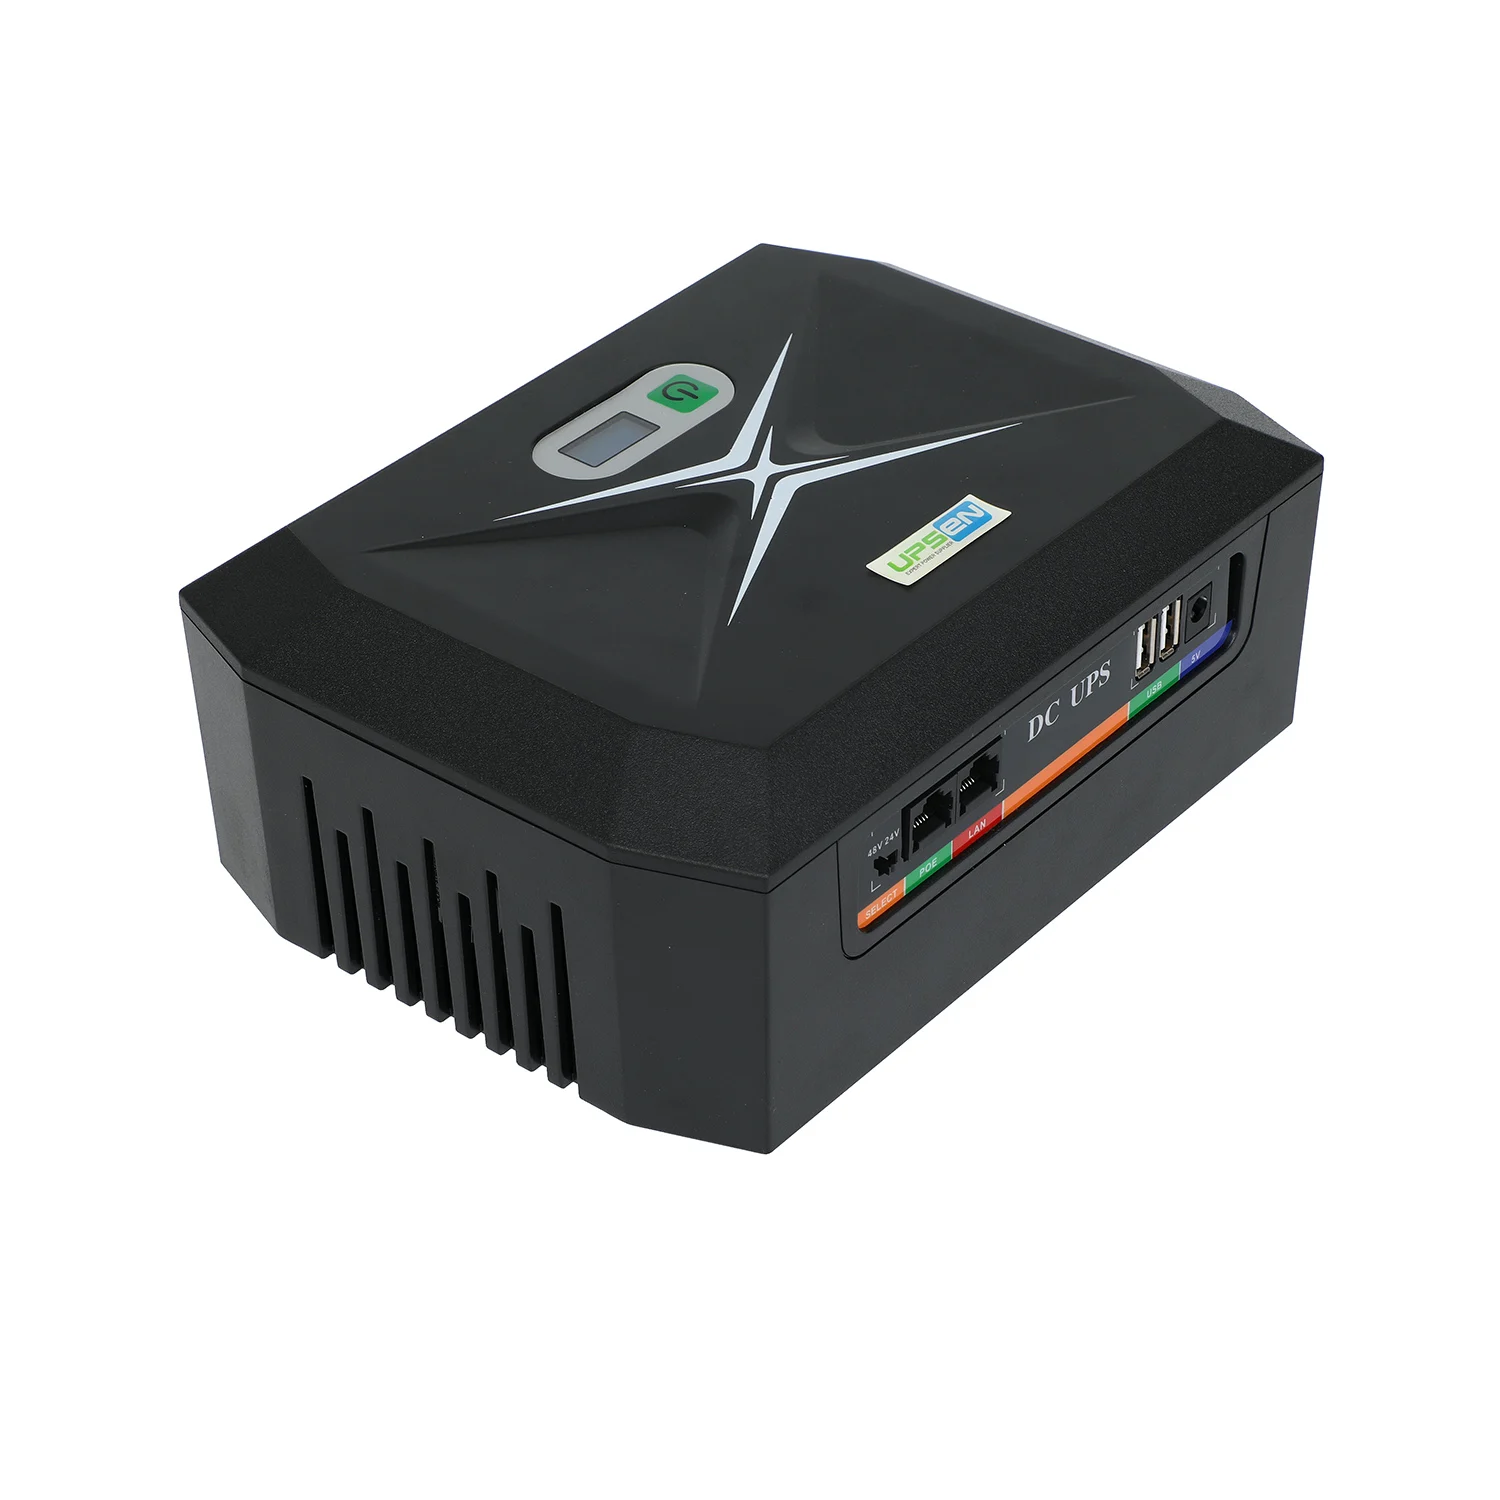 Sai Keor Dc 25 W With Schuko - Sai Keor Dc Pin. Domestic Sai For Router;  Modem; 25w, Domestic Appliances-legrand - Uninterrupted Power Supply (ups)  - AliExpress